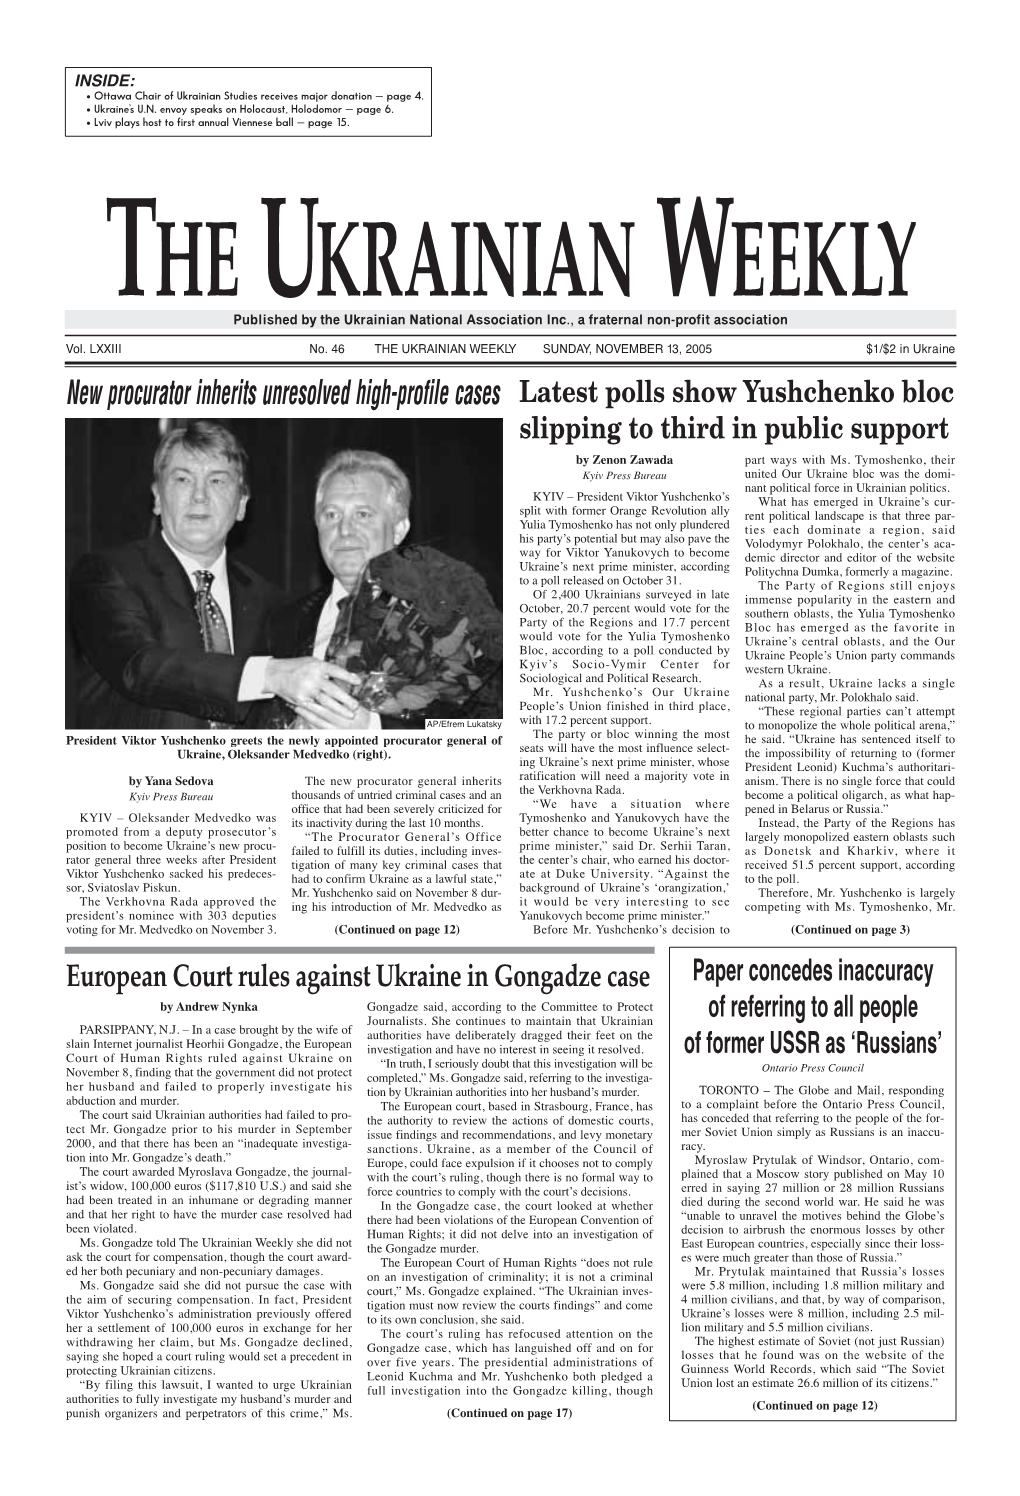 The Ukrainian Weekly 2005, No.46